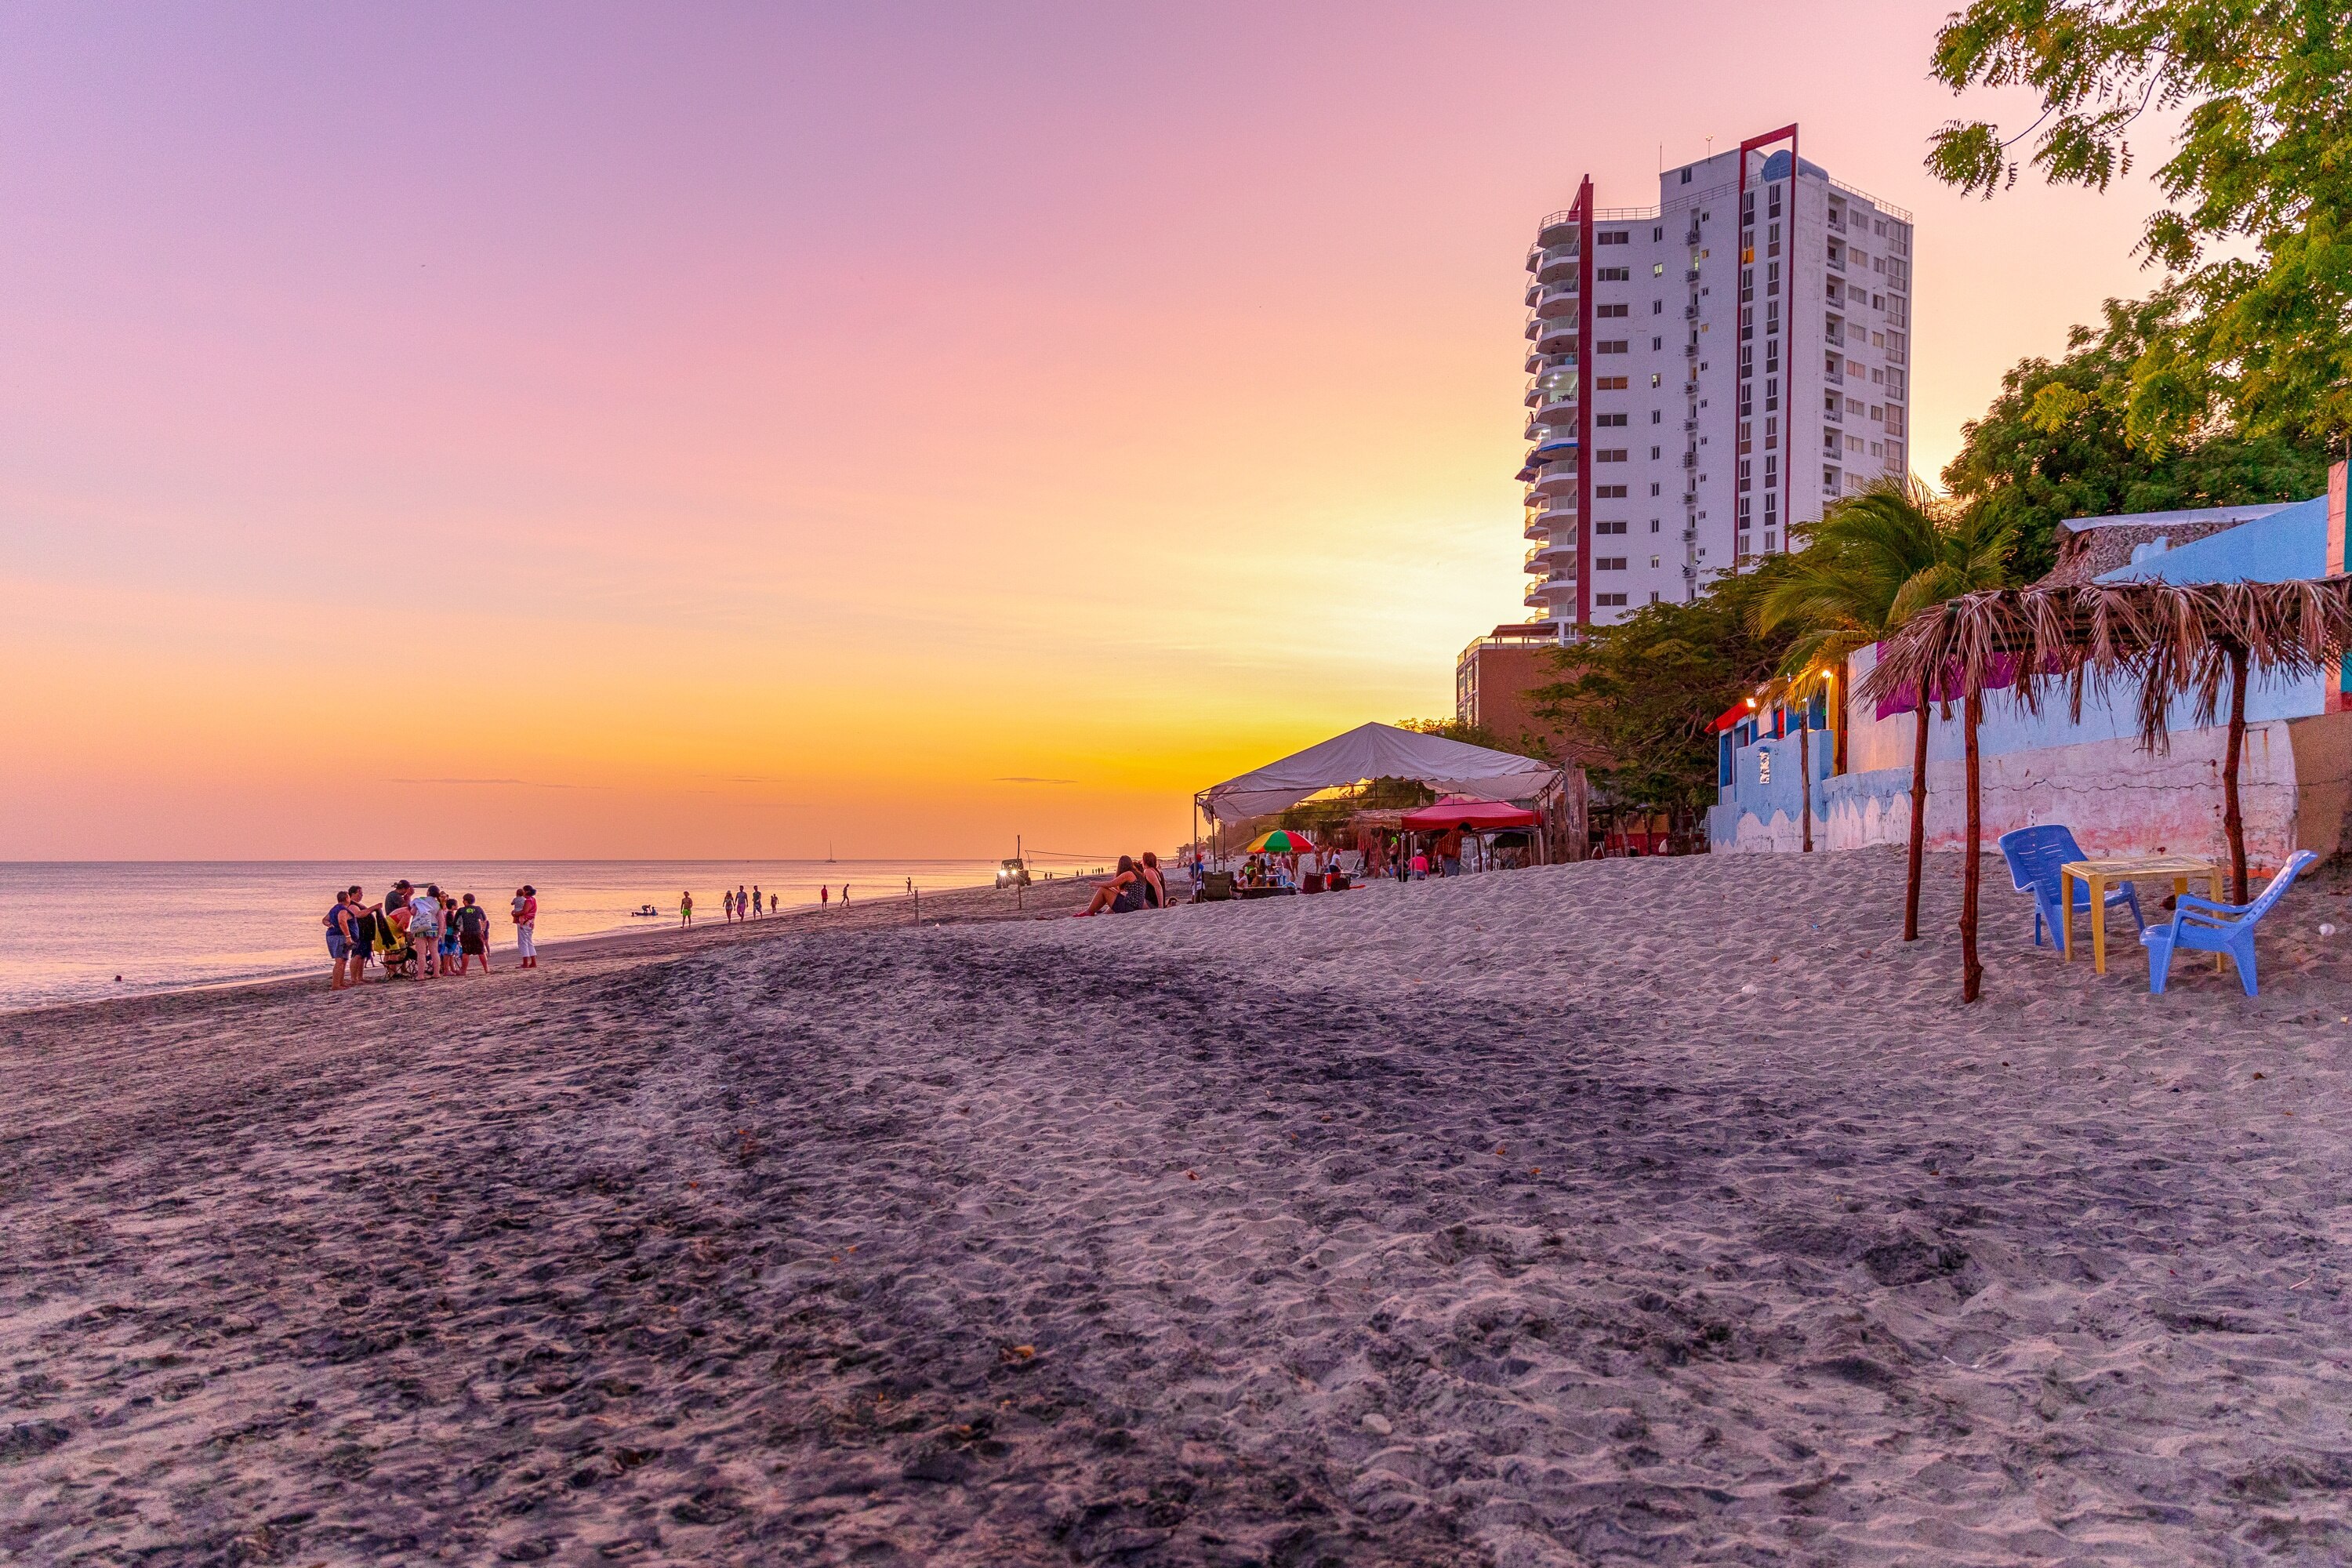 Panama City Beach, Florida, United States of America